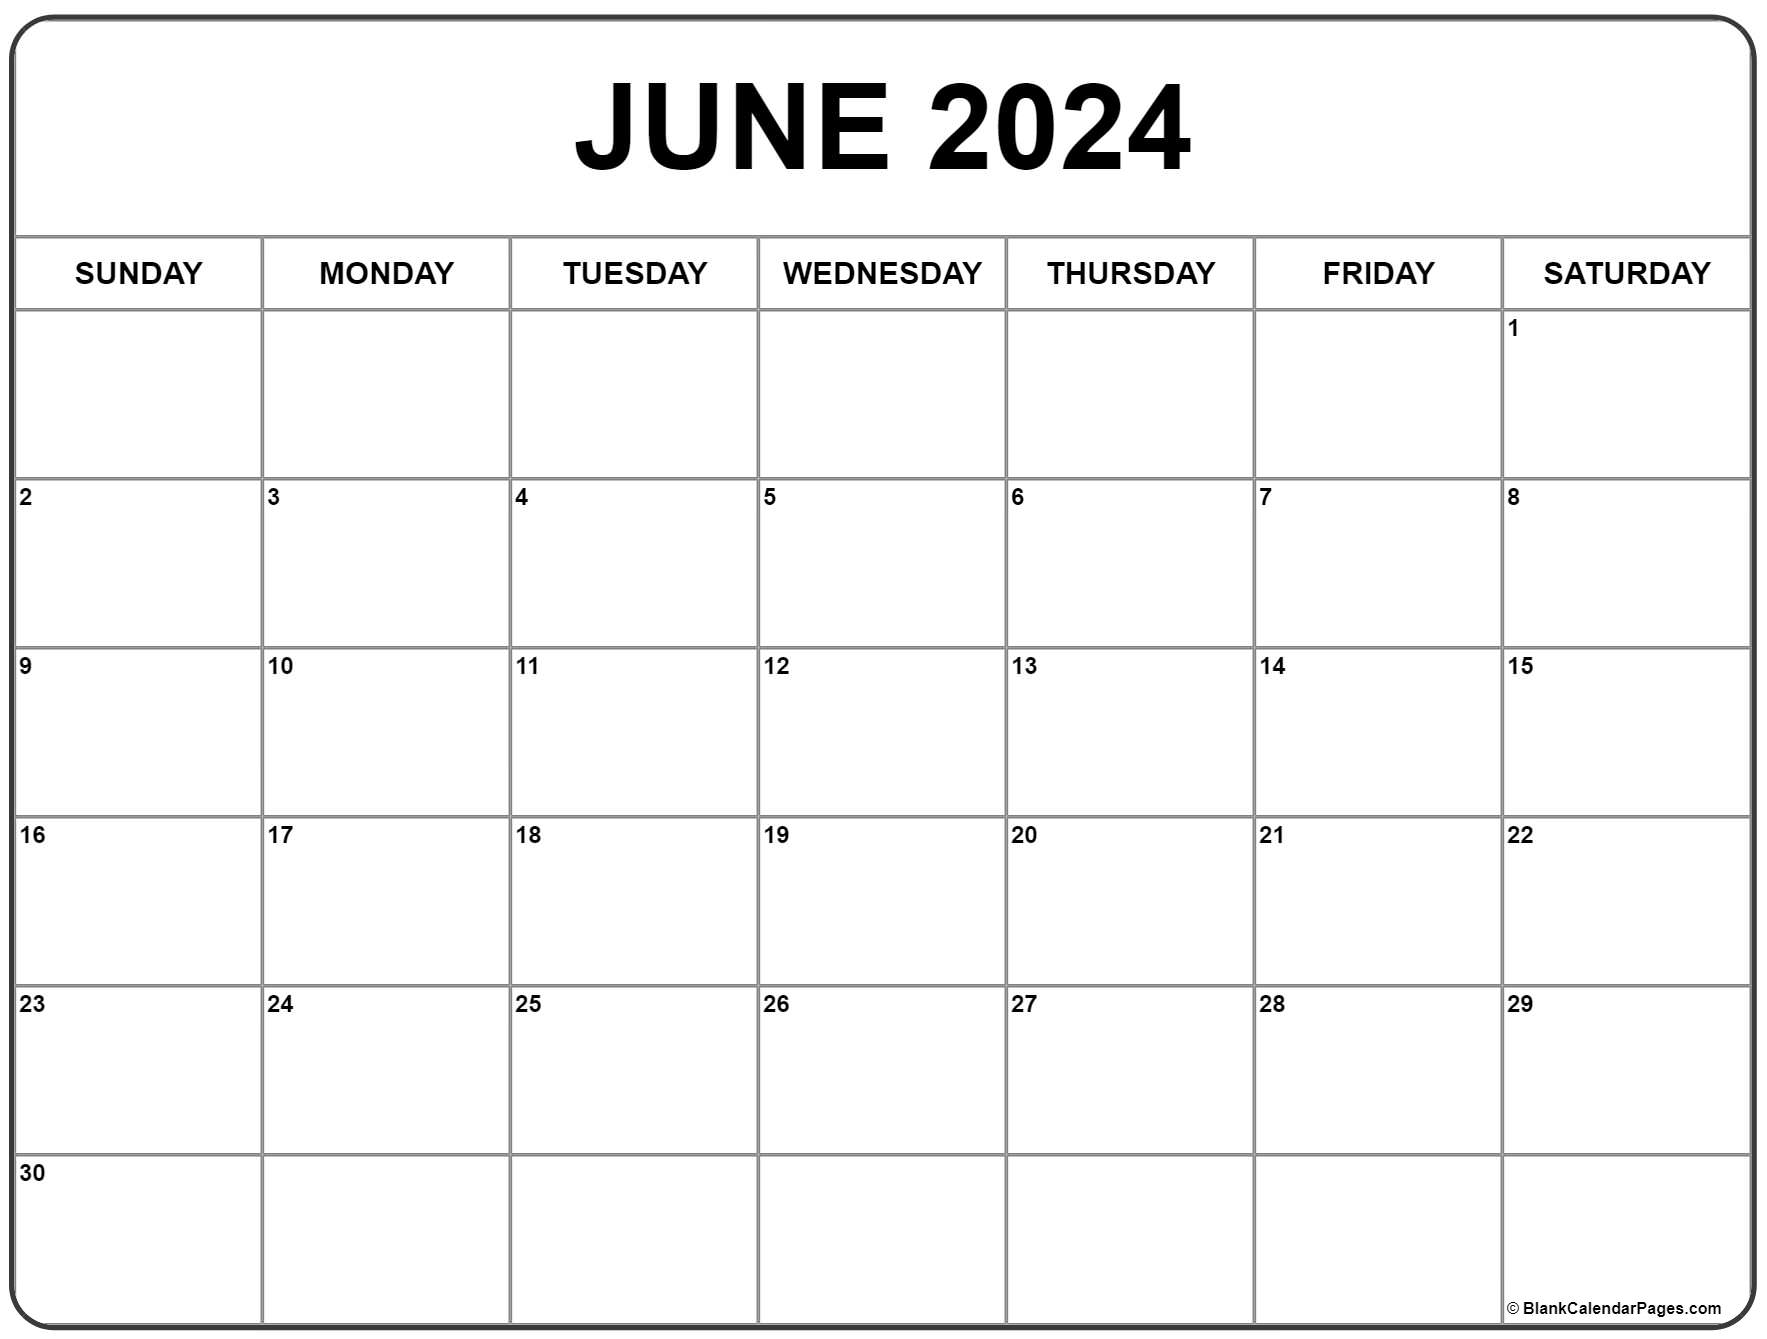 June 2024 Calendar | Free Printable Calendar for Free Printable Calendar June 2024